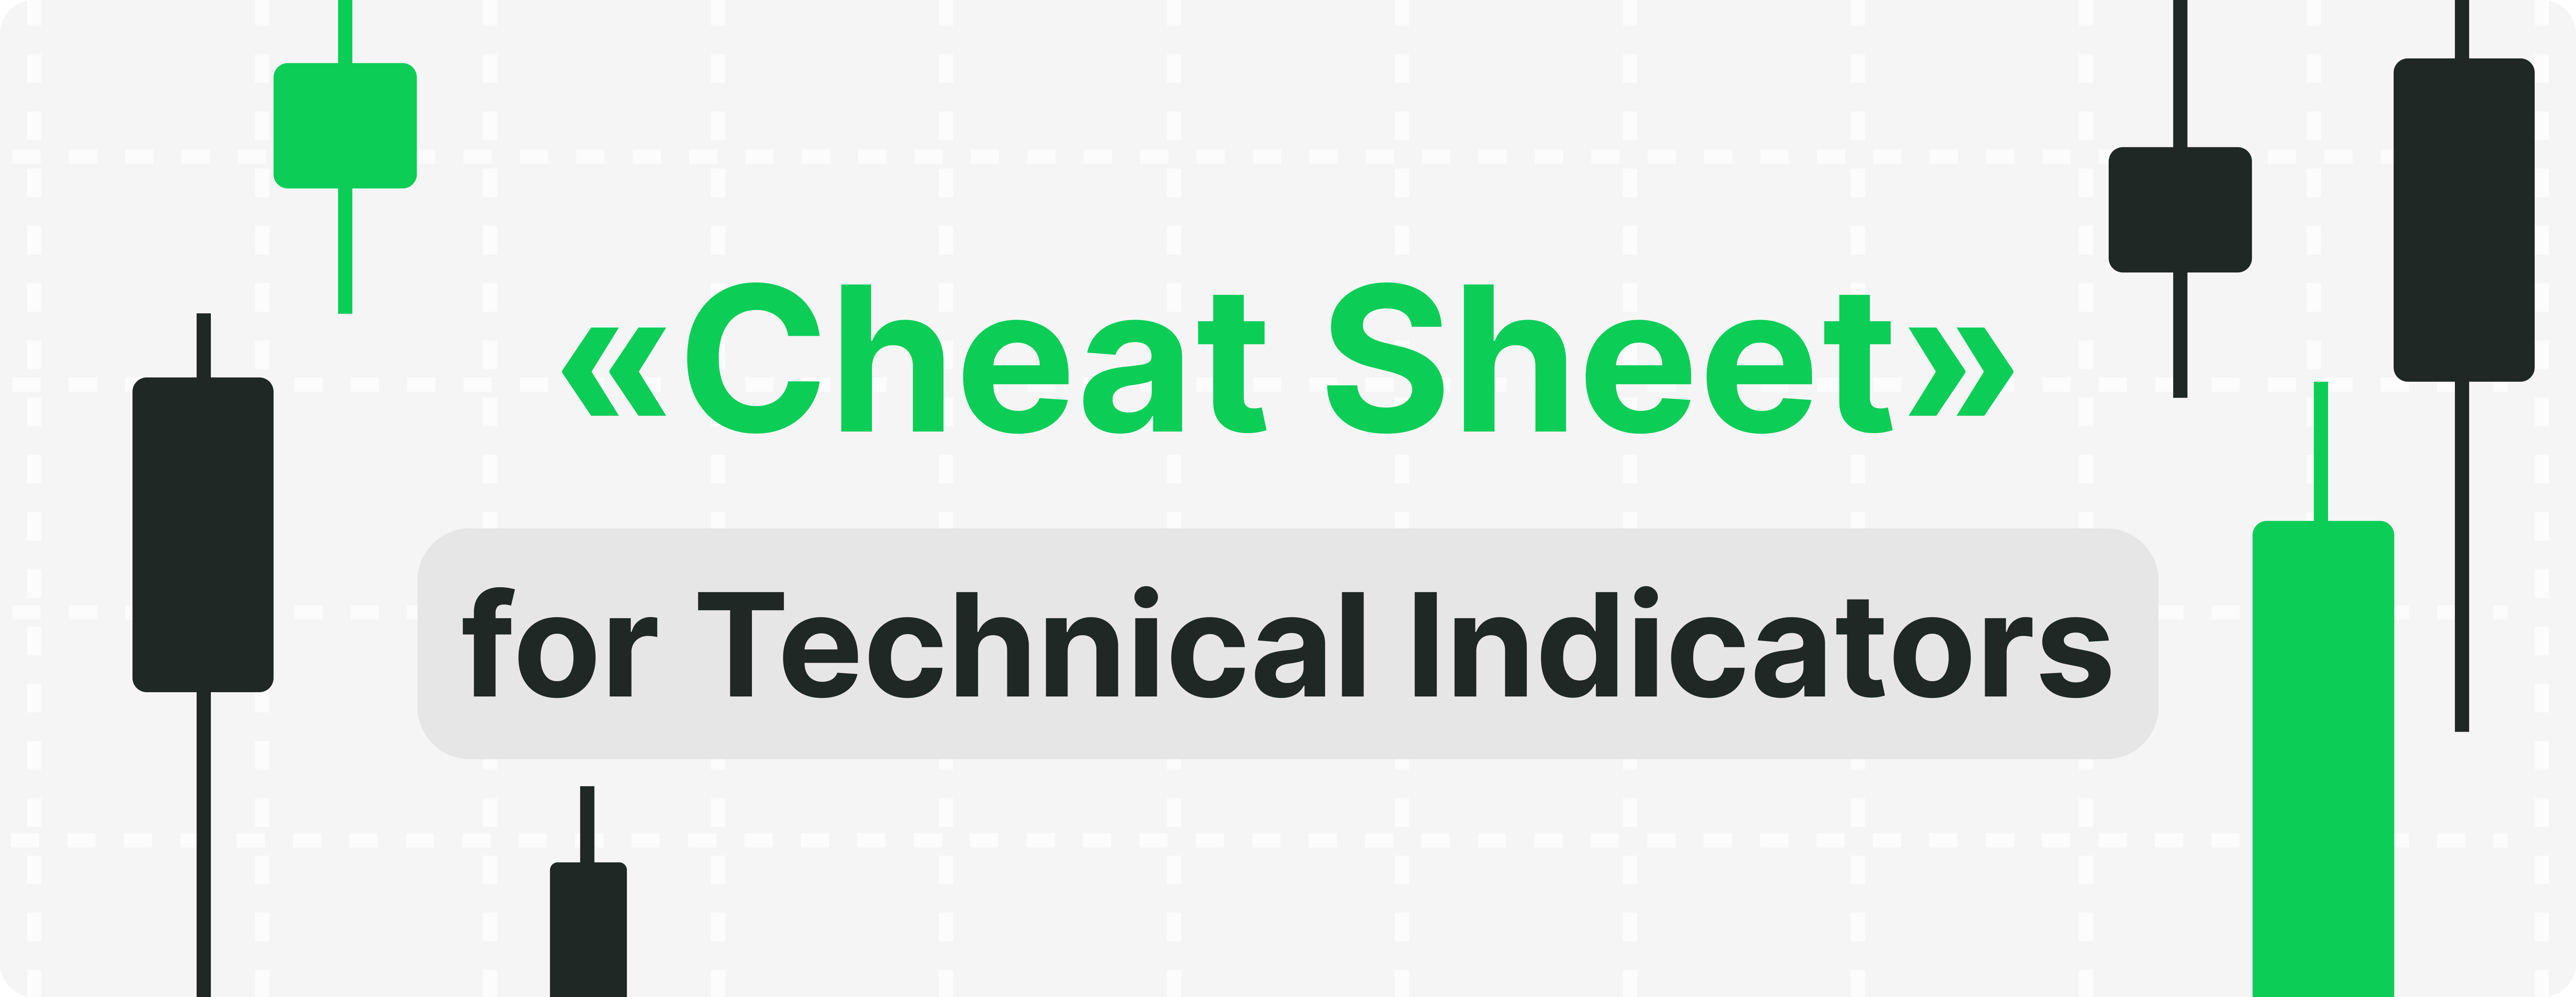 'Cheat Sheet' for Technical Indicators